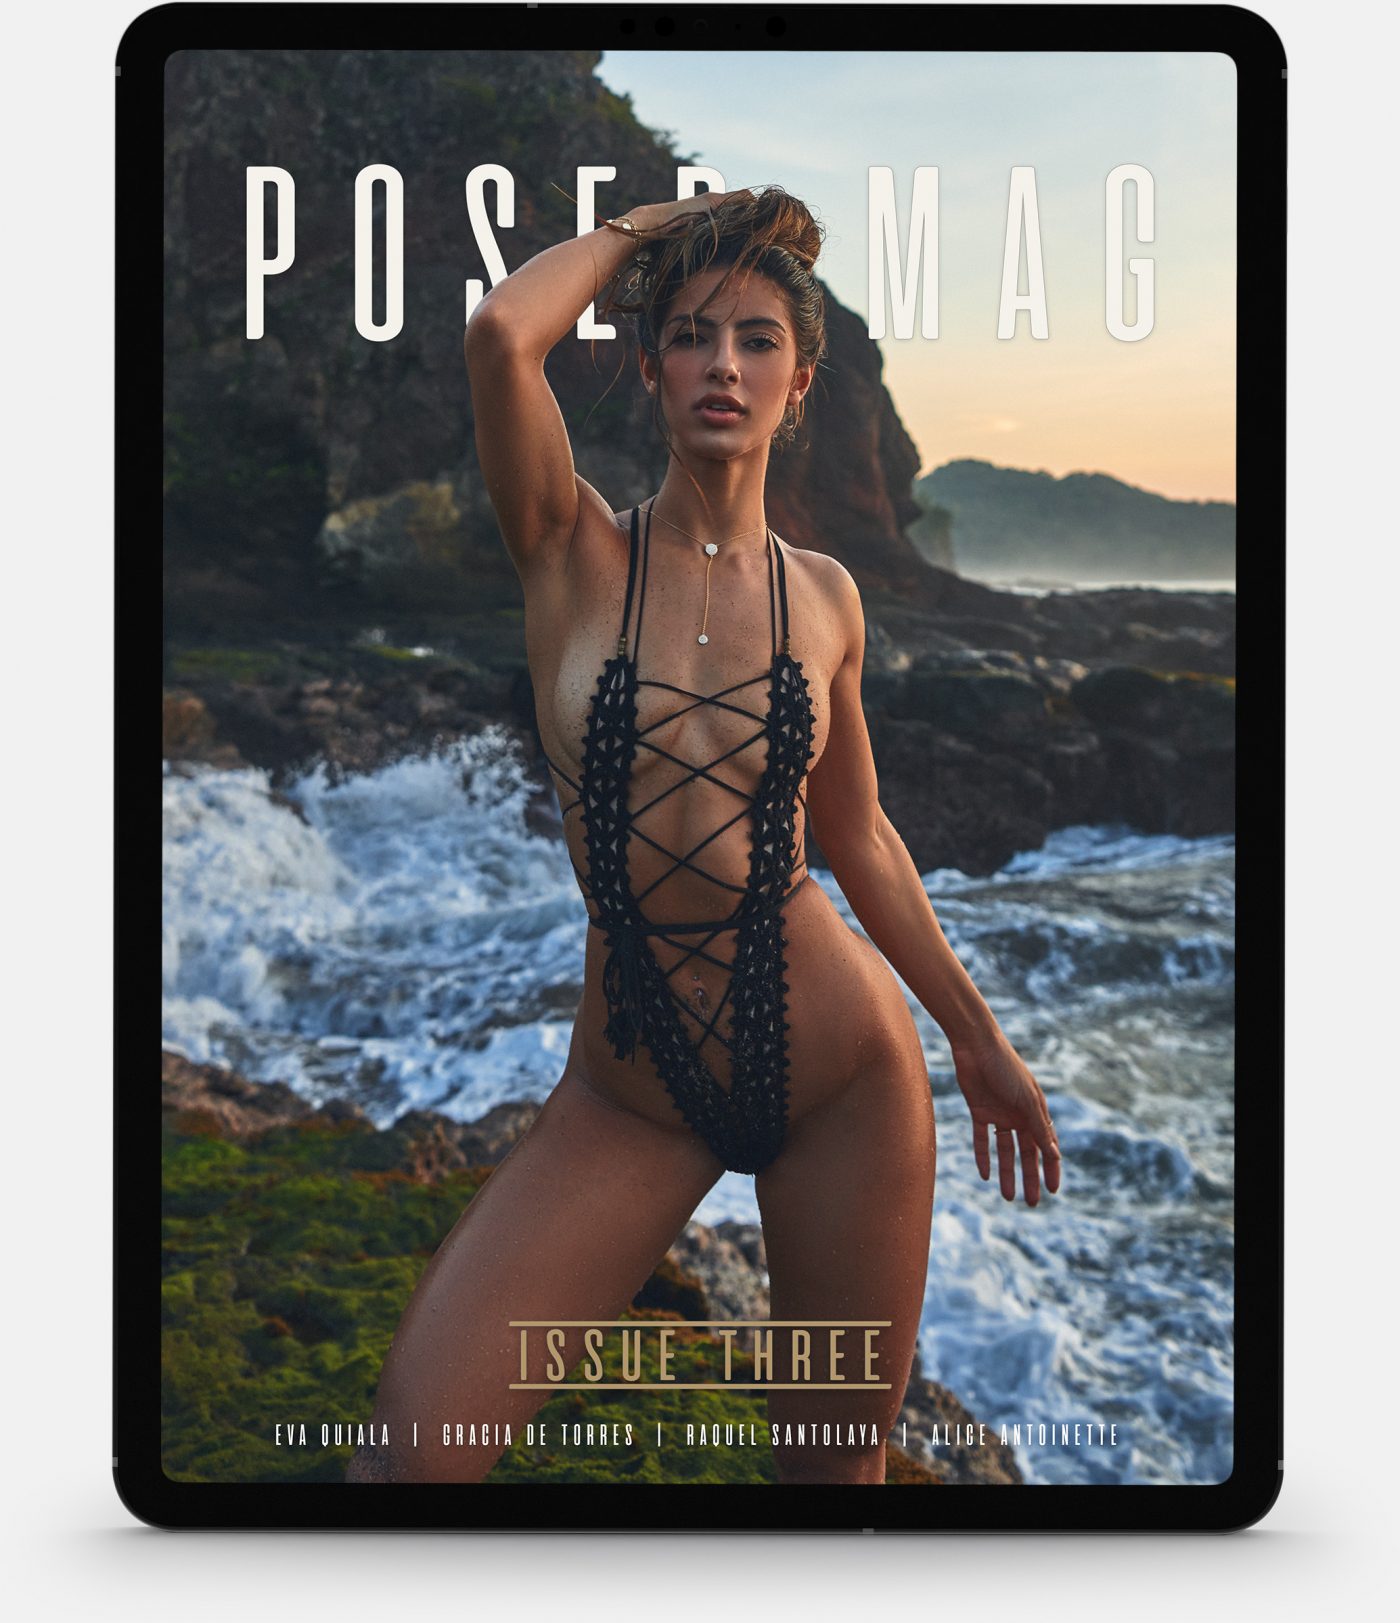 Eva Quiala model posing nude for POSED MAG digital magazine